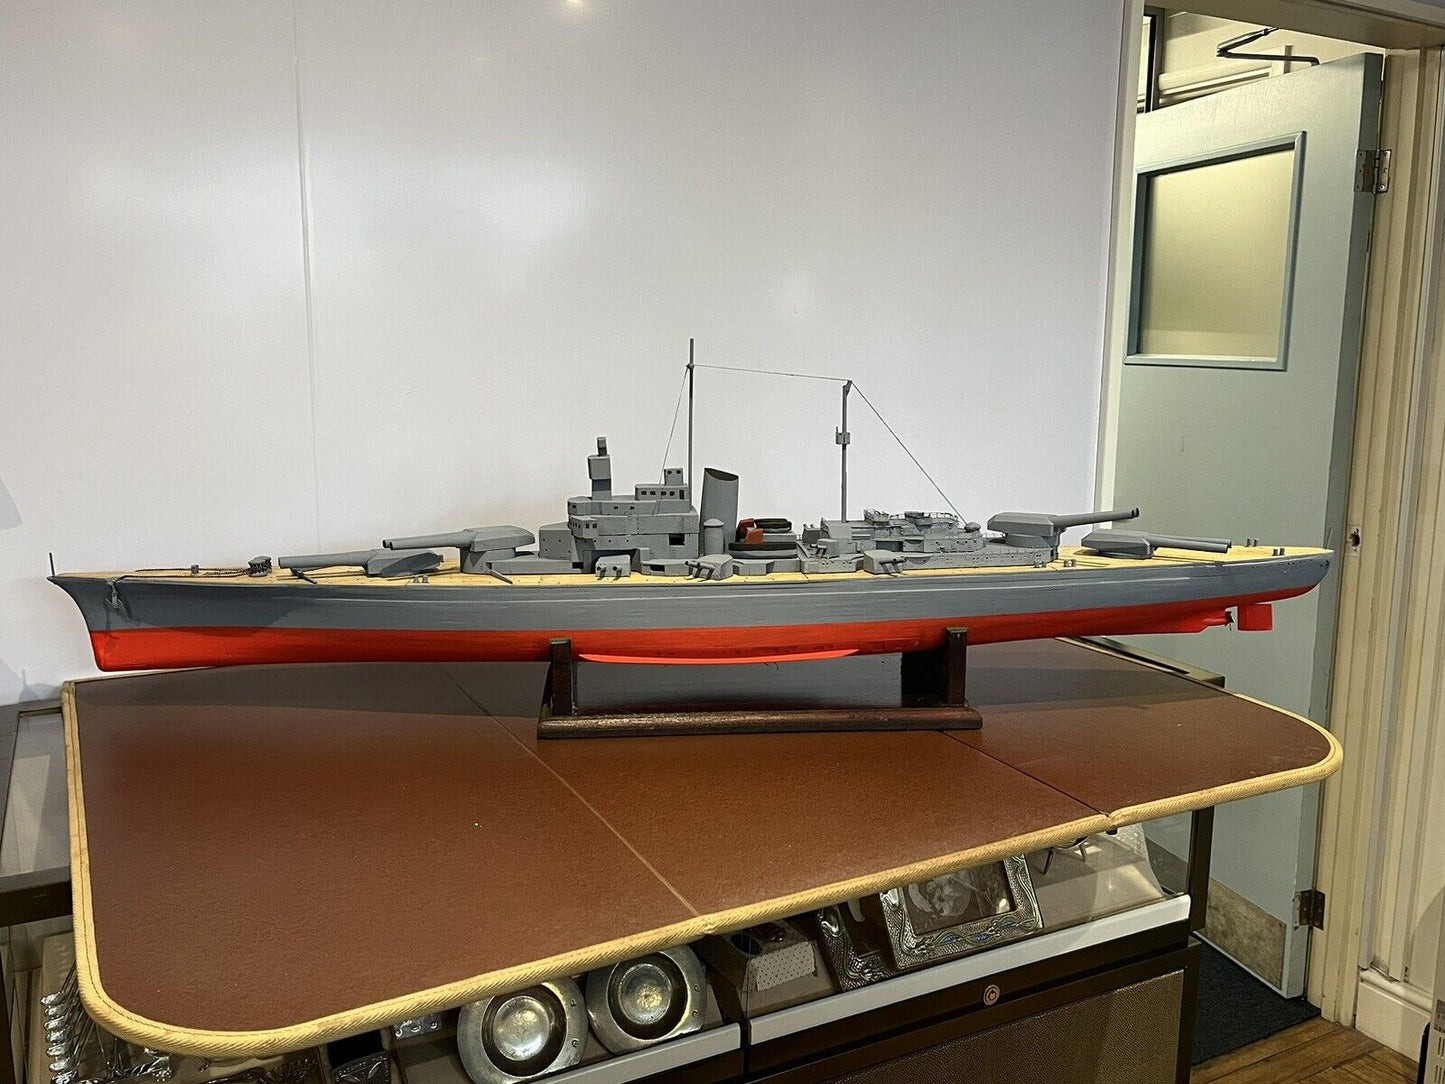 Battleships. 4 Large Detailed Models.